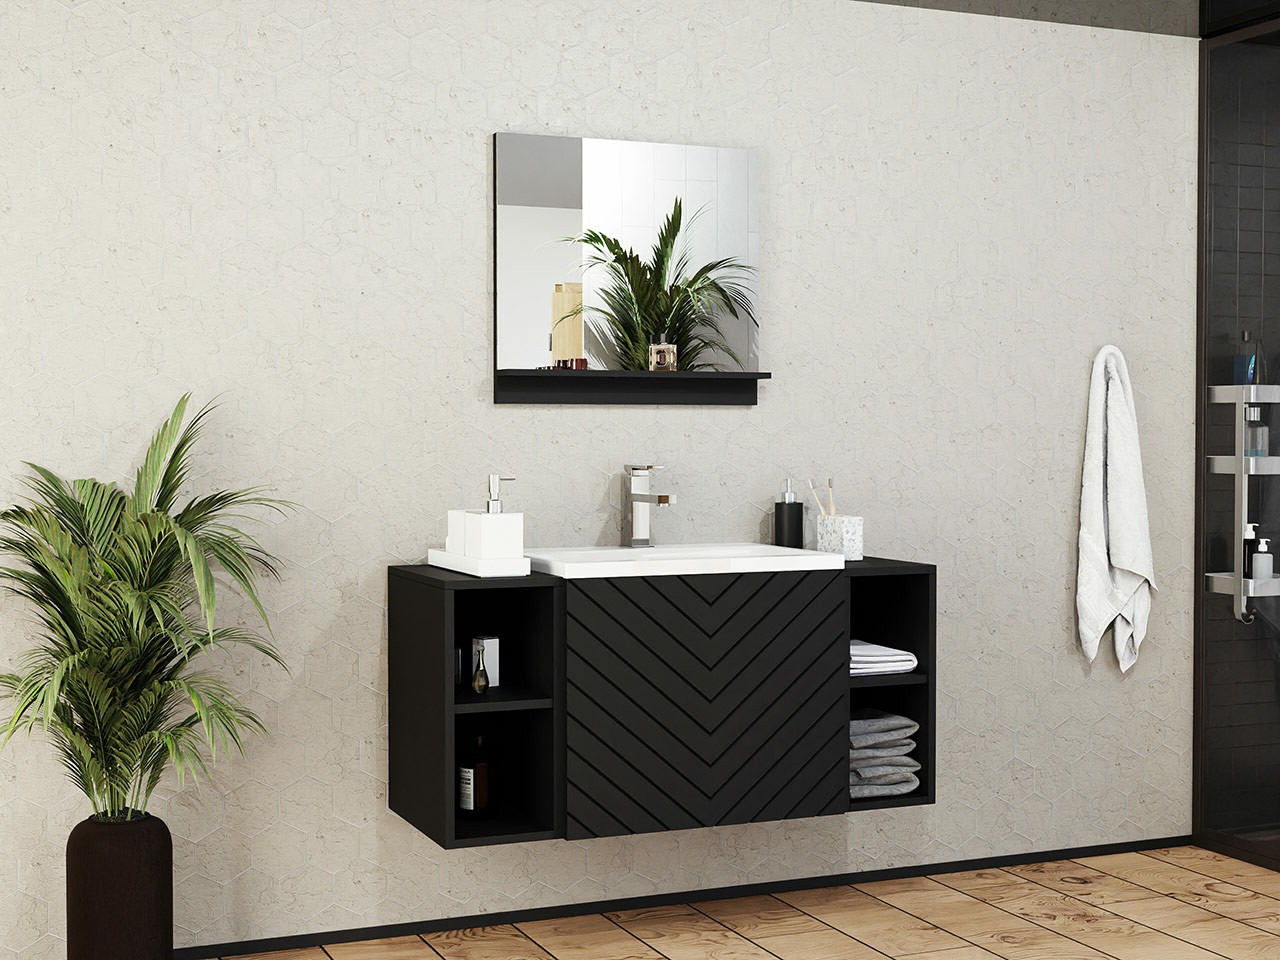 Fürdőszoba garnitúra Comfivo E104 (Fekete + Grafit)